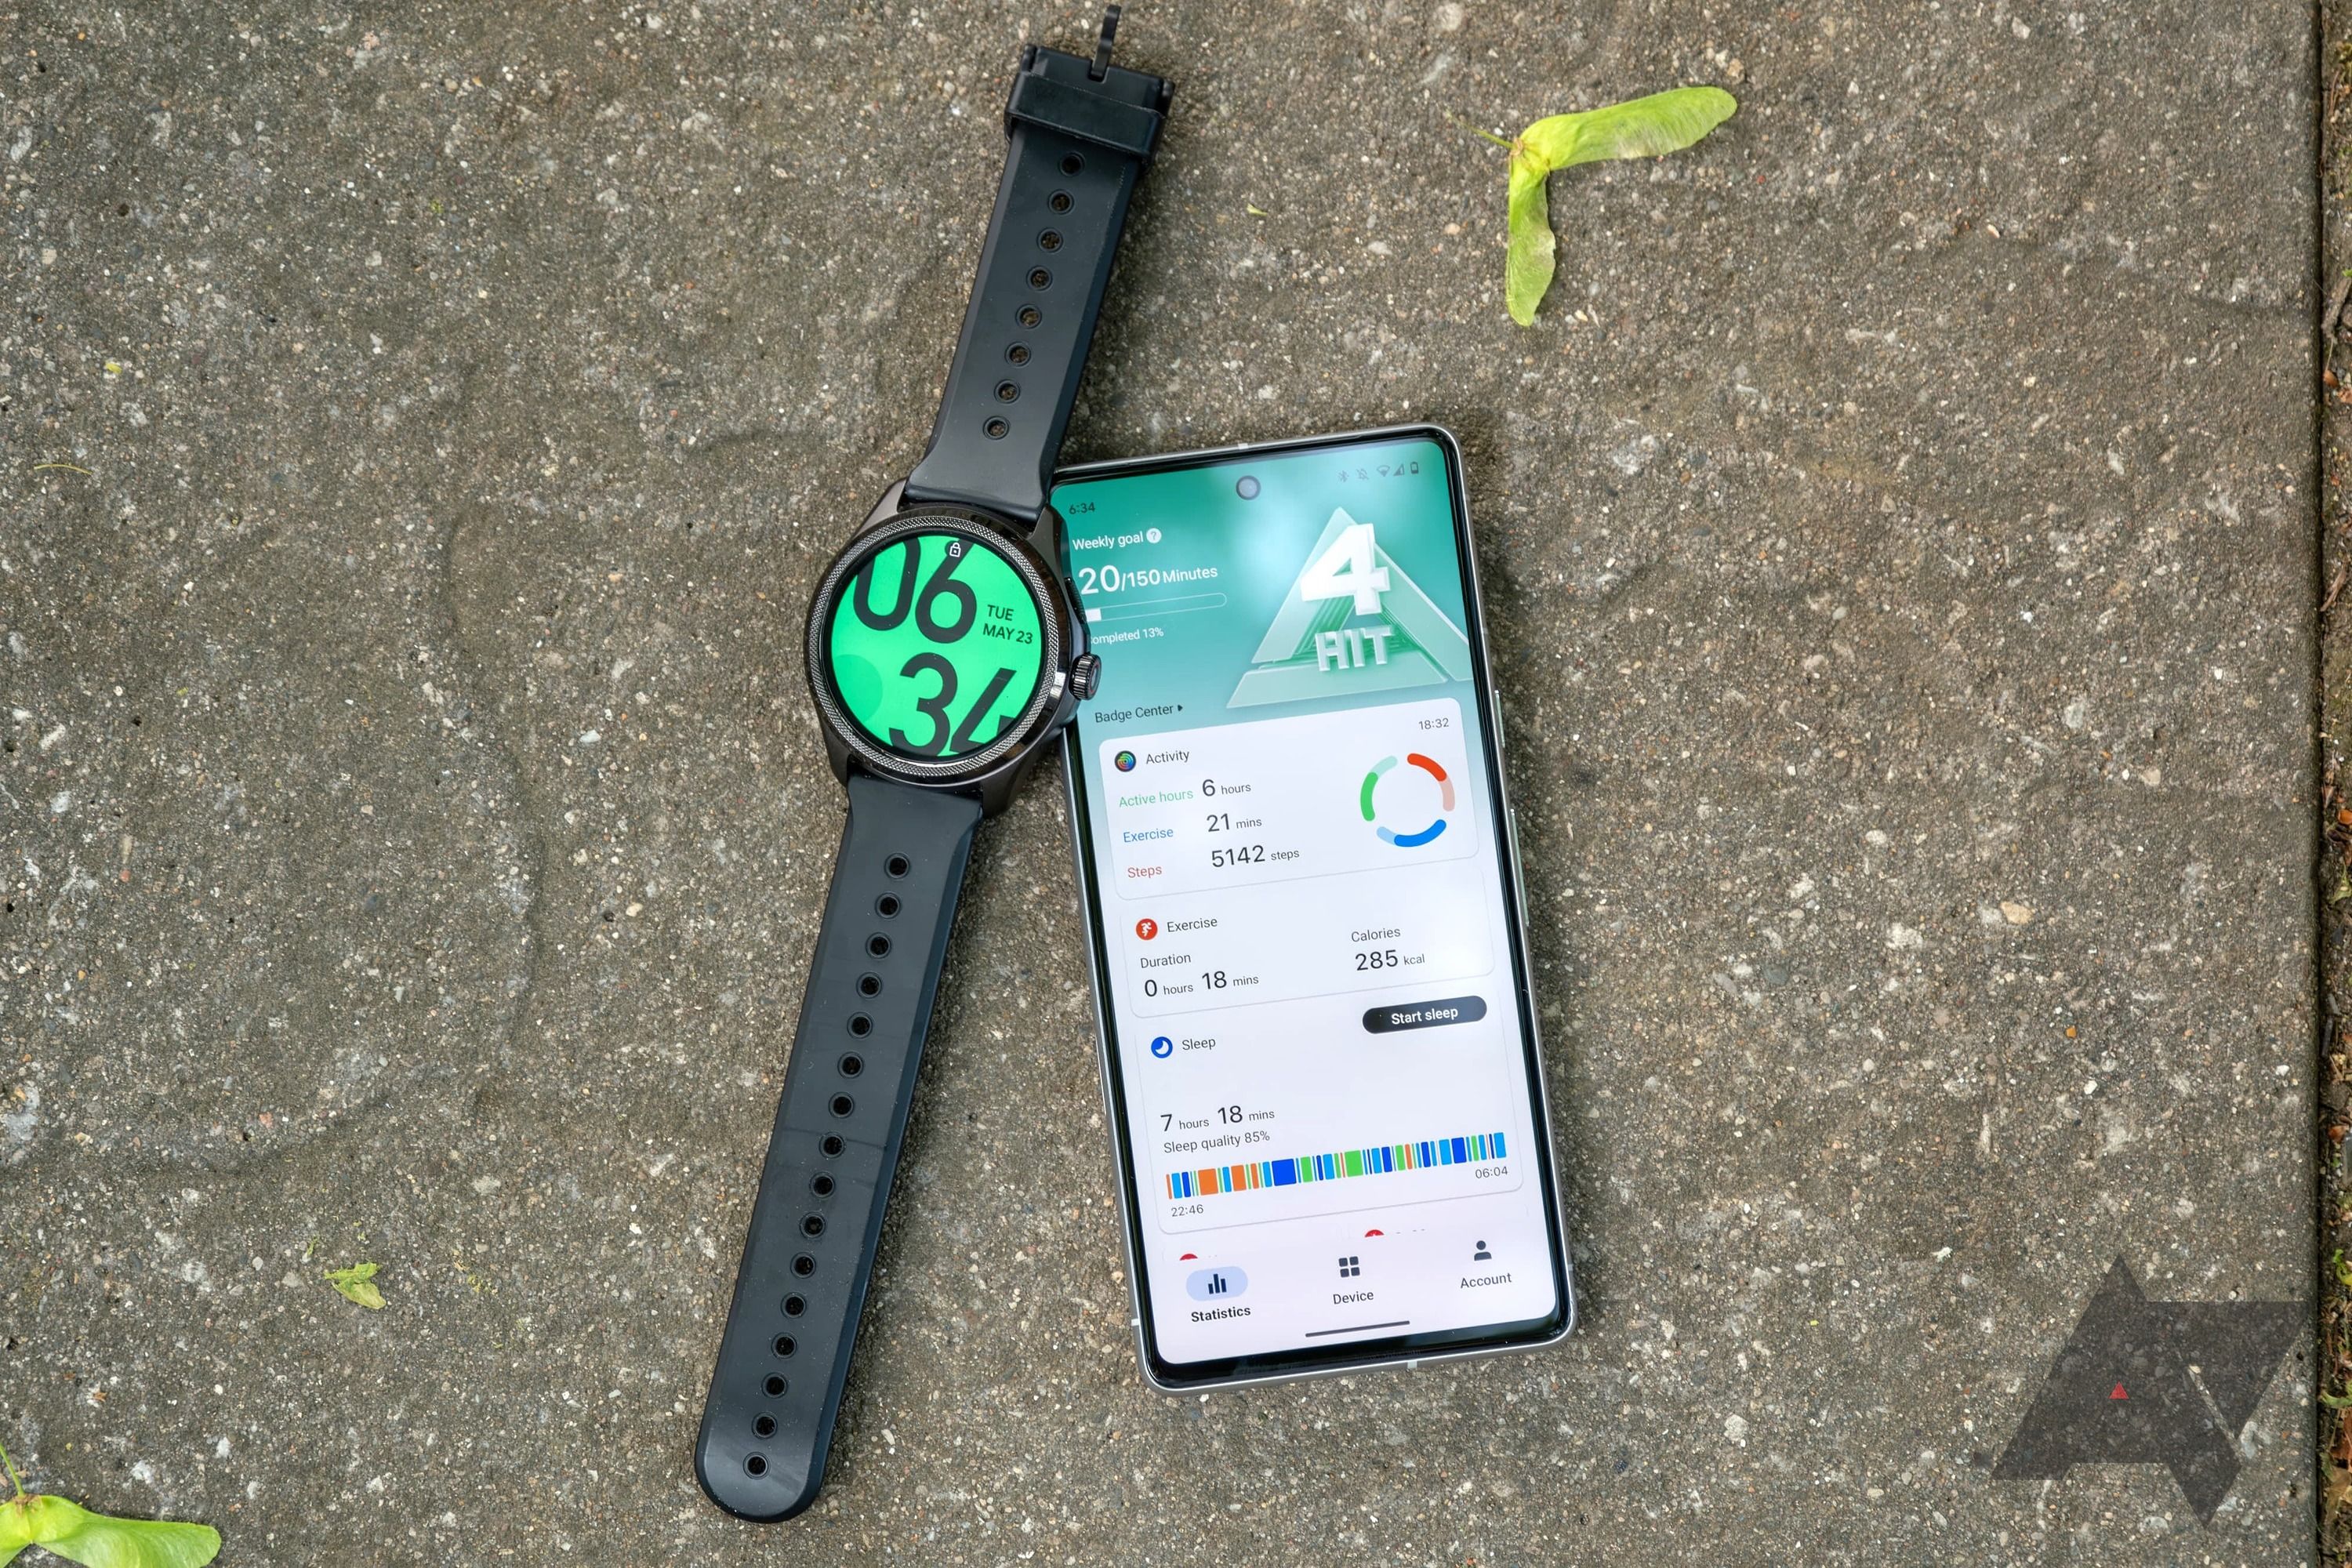 TicWatch Pro 5 review: the definitive smartwatch - GizChina.it